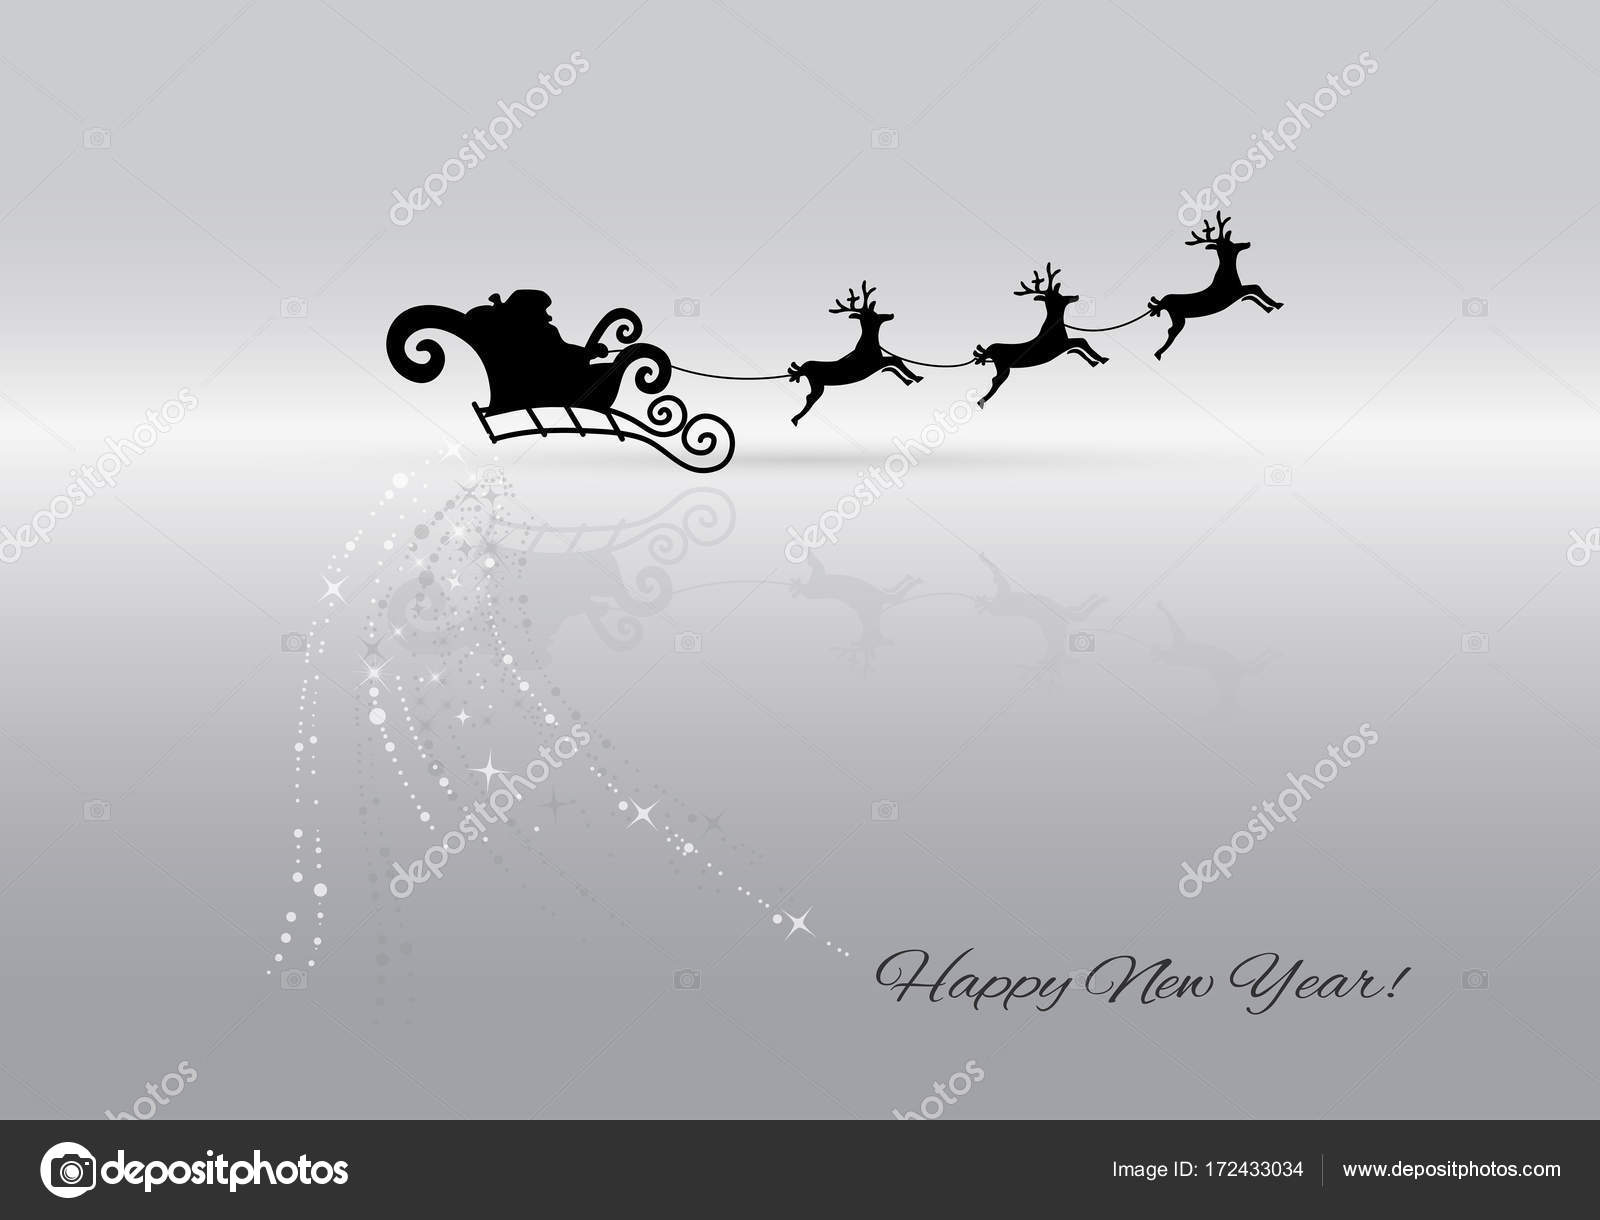 Black Silhouette. Santa Claus flying with reindeer sleigh. Stock Vector ...